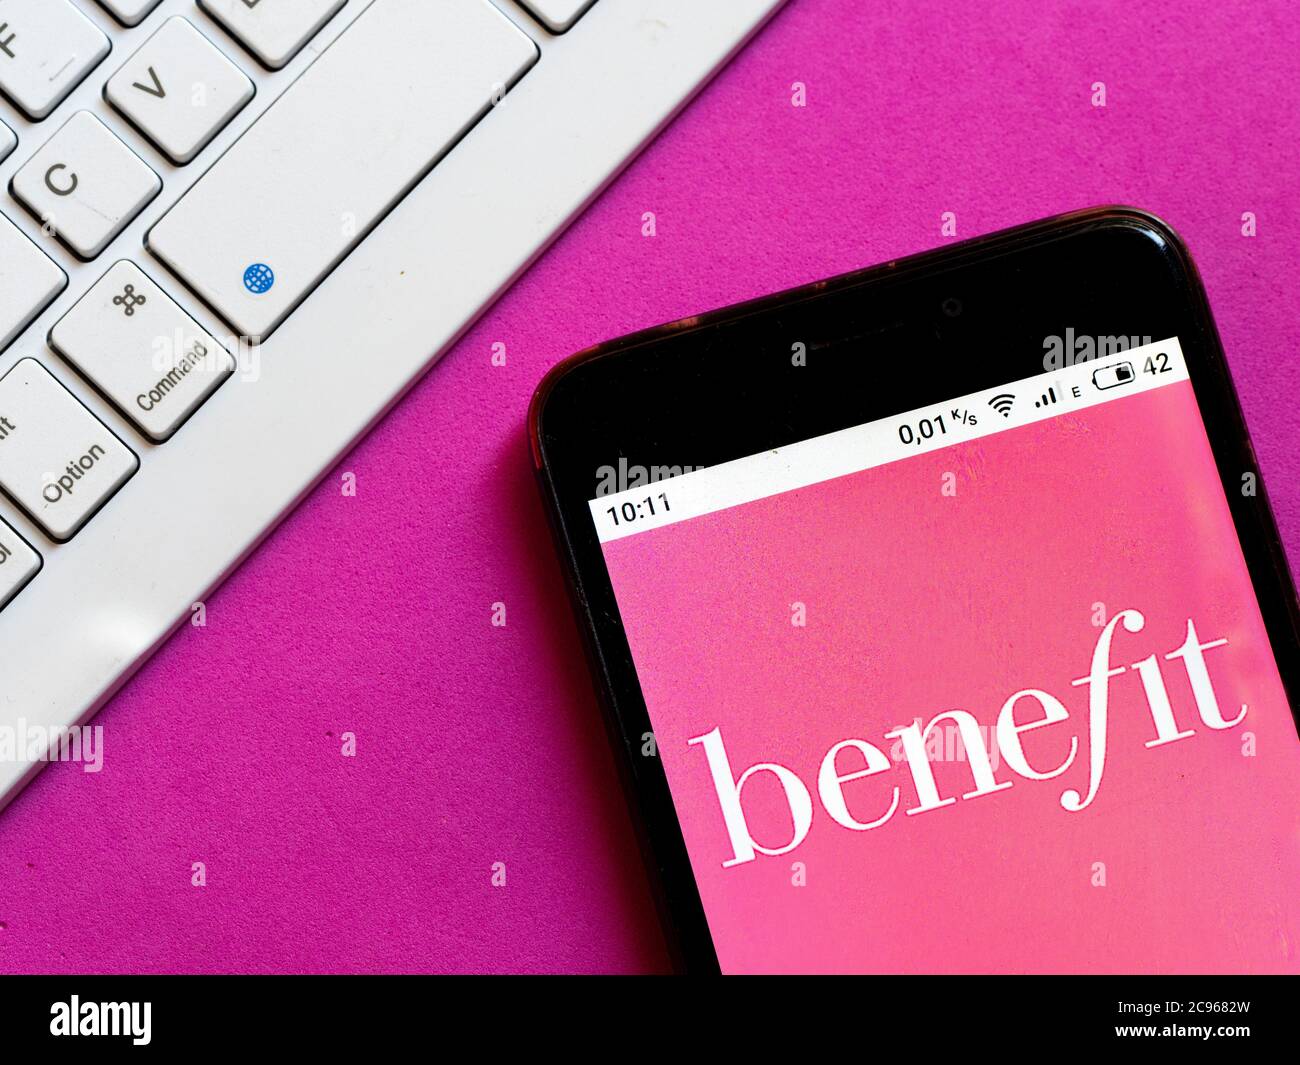 benefit cosmetics logo